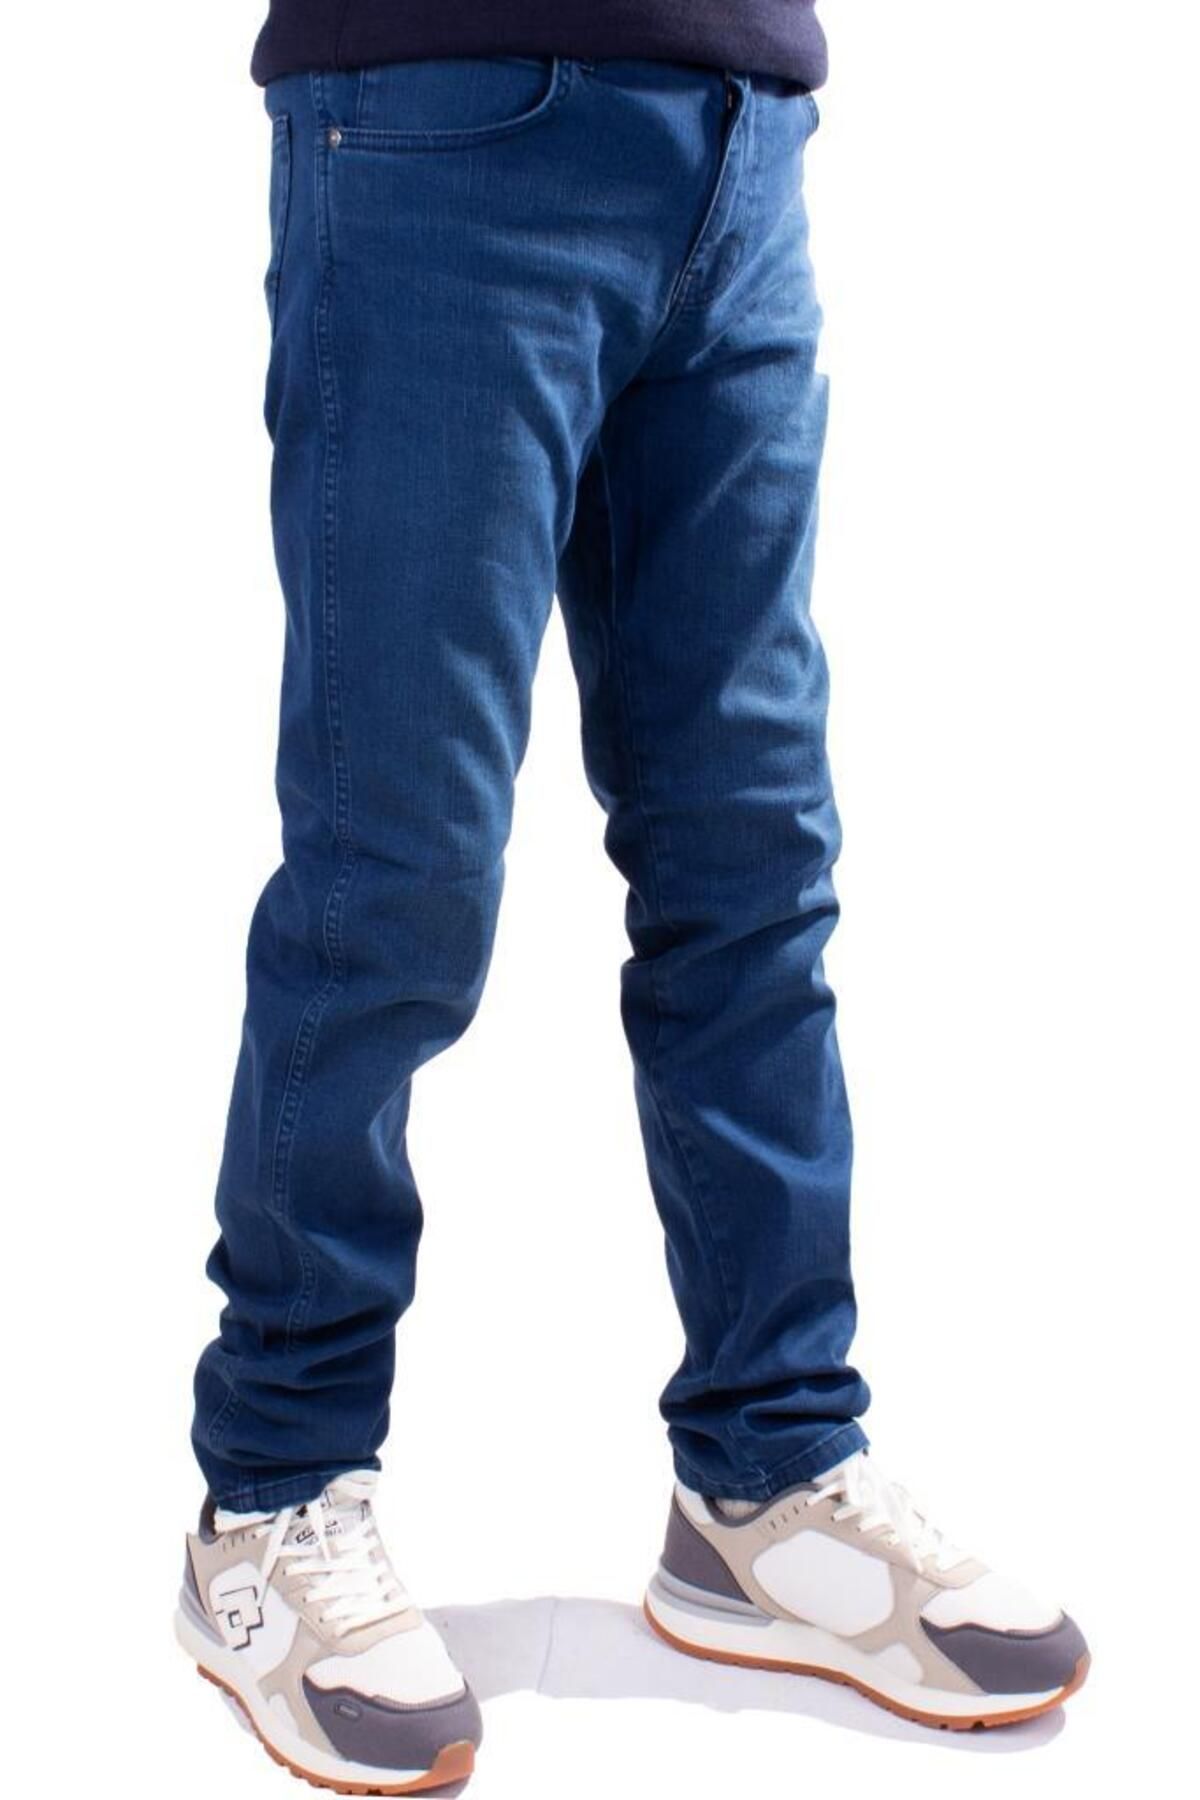 Twister Jeans Twister Vegas 724-02B Mavi Yüksek Bel Rahat Paça Erkek Jeans Pantolon